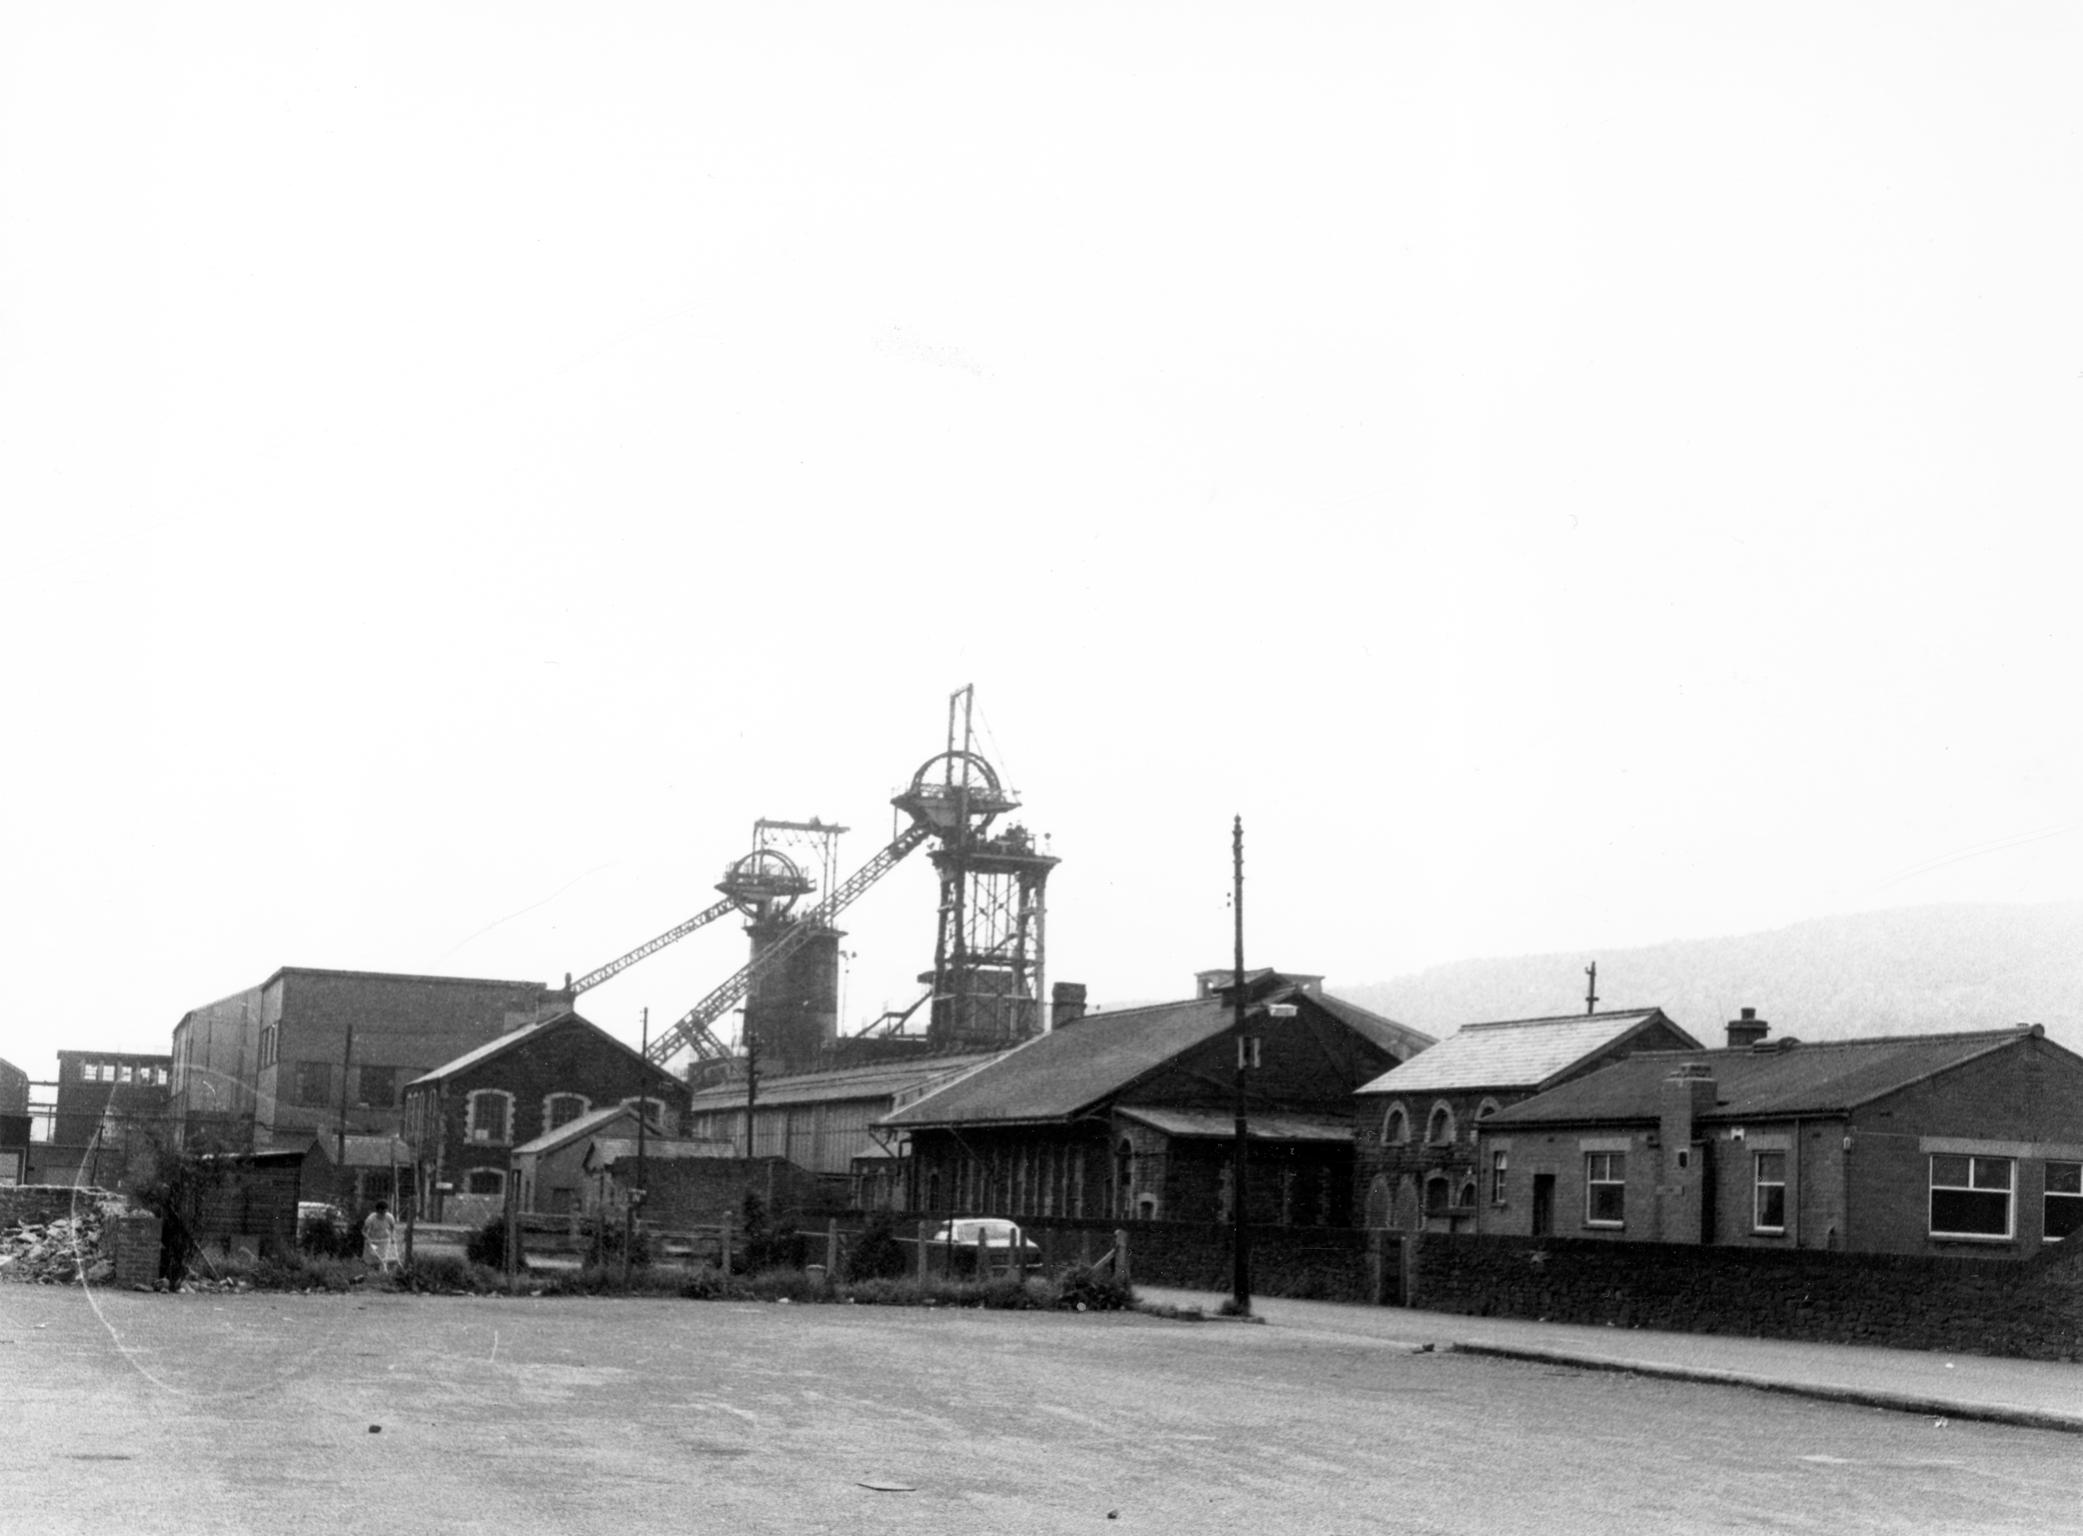 Abercynon Colliery, photograph